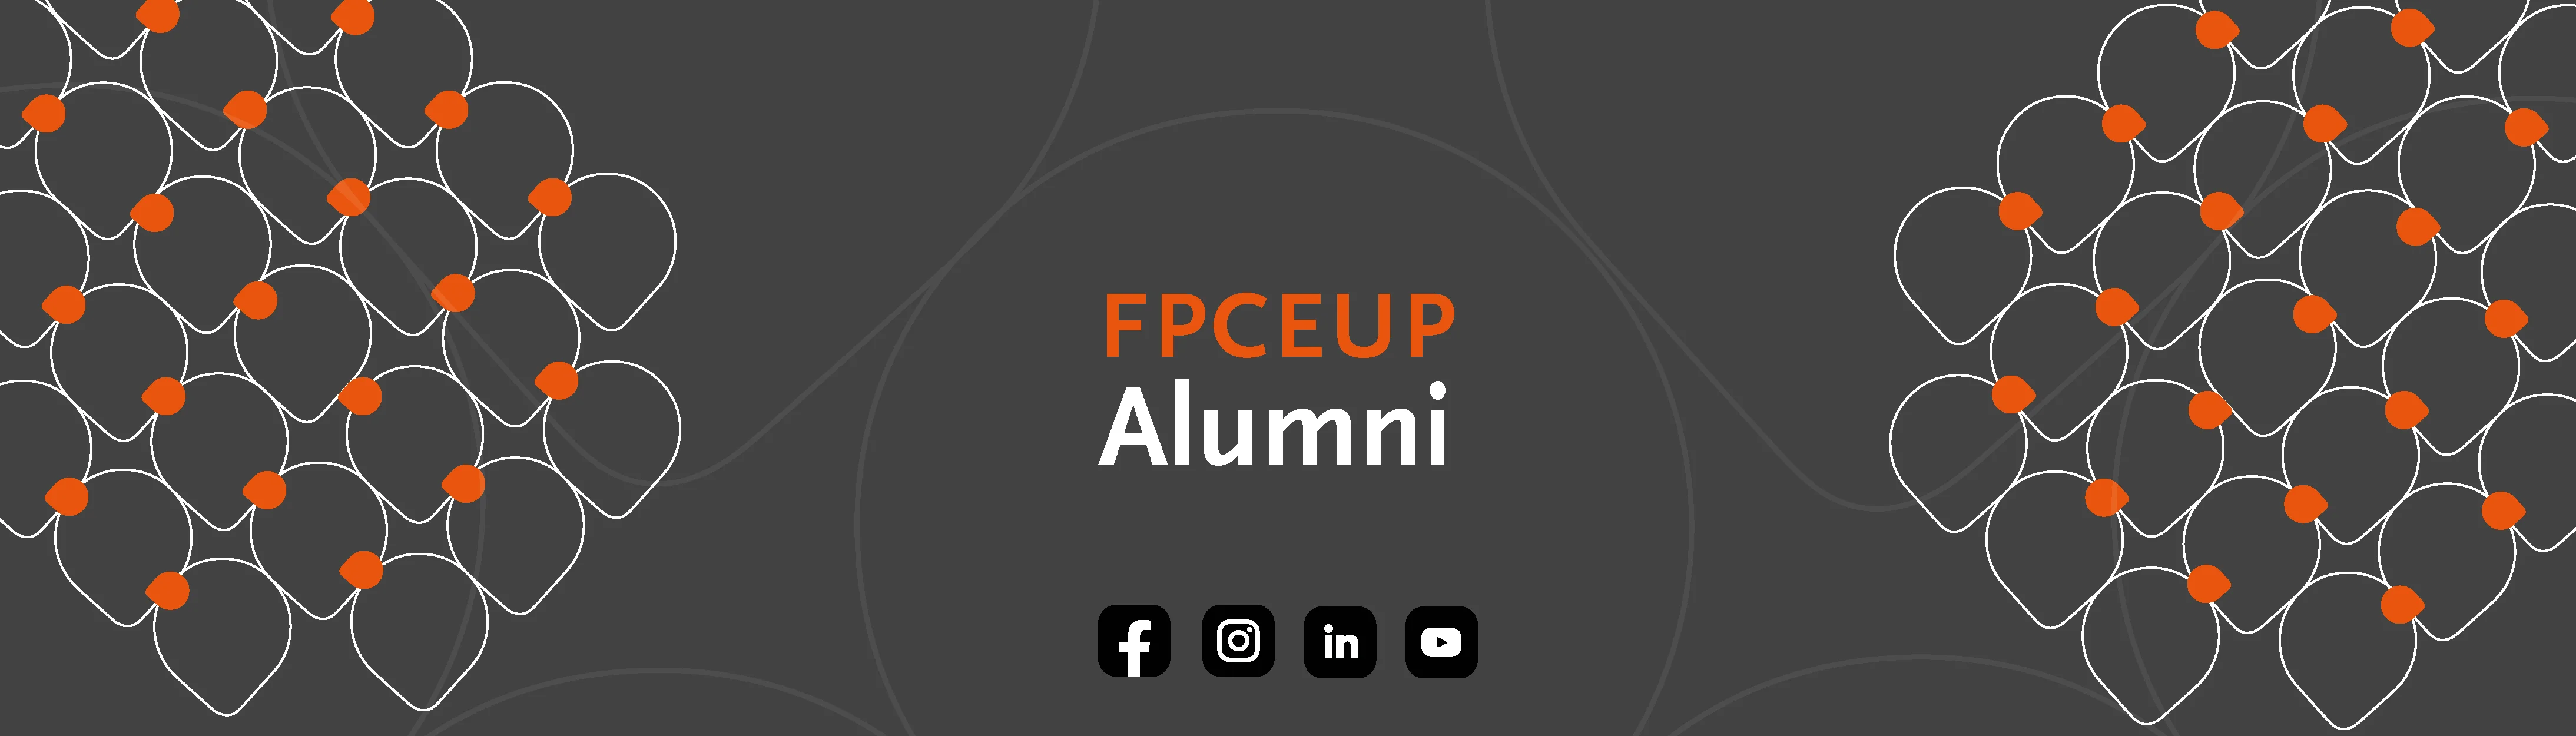 FPCEUP Alumni banner